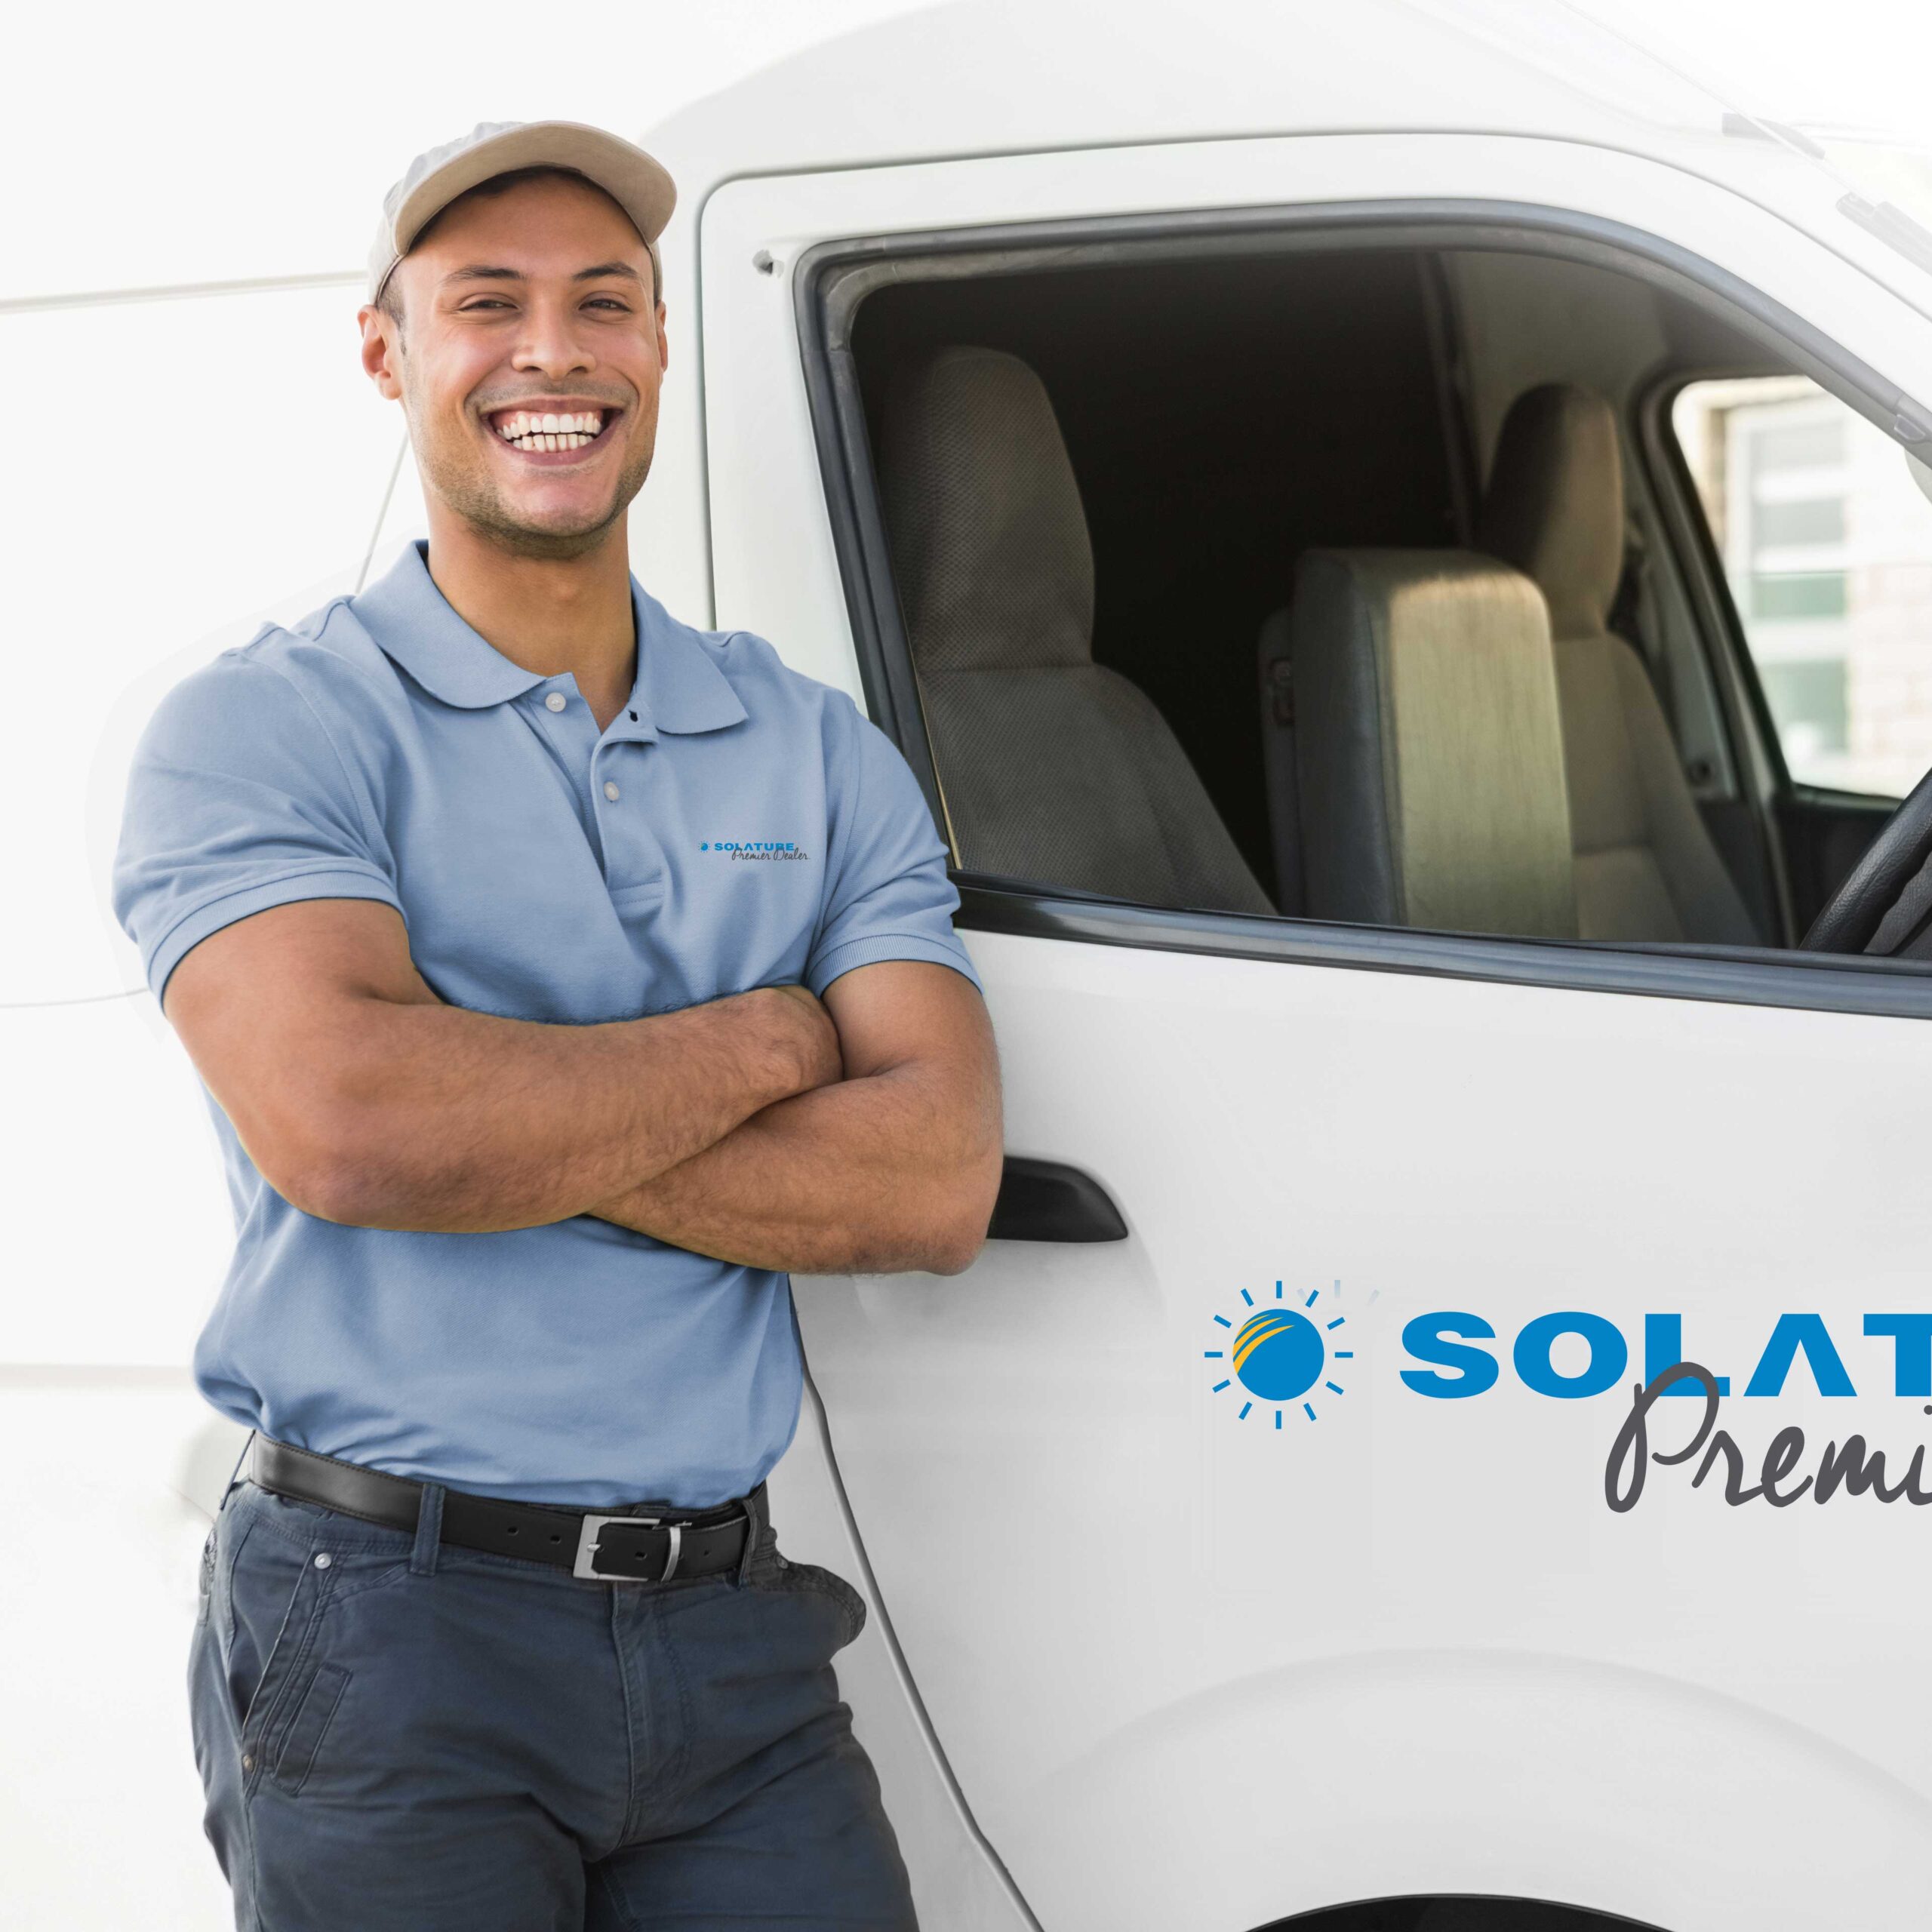 Solatube premier dealer guy smiling next to van